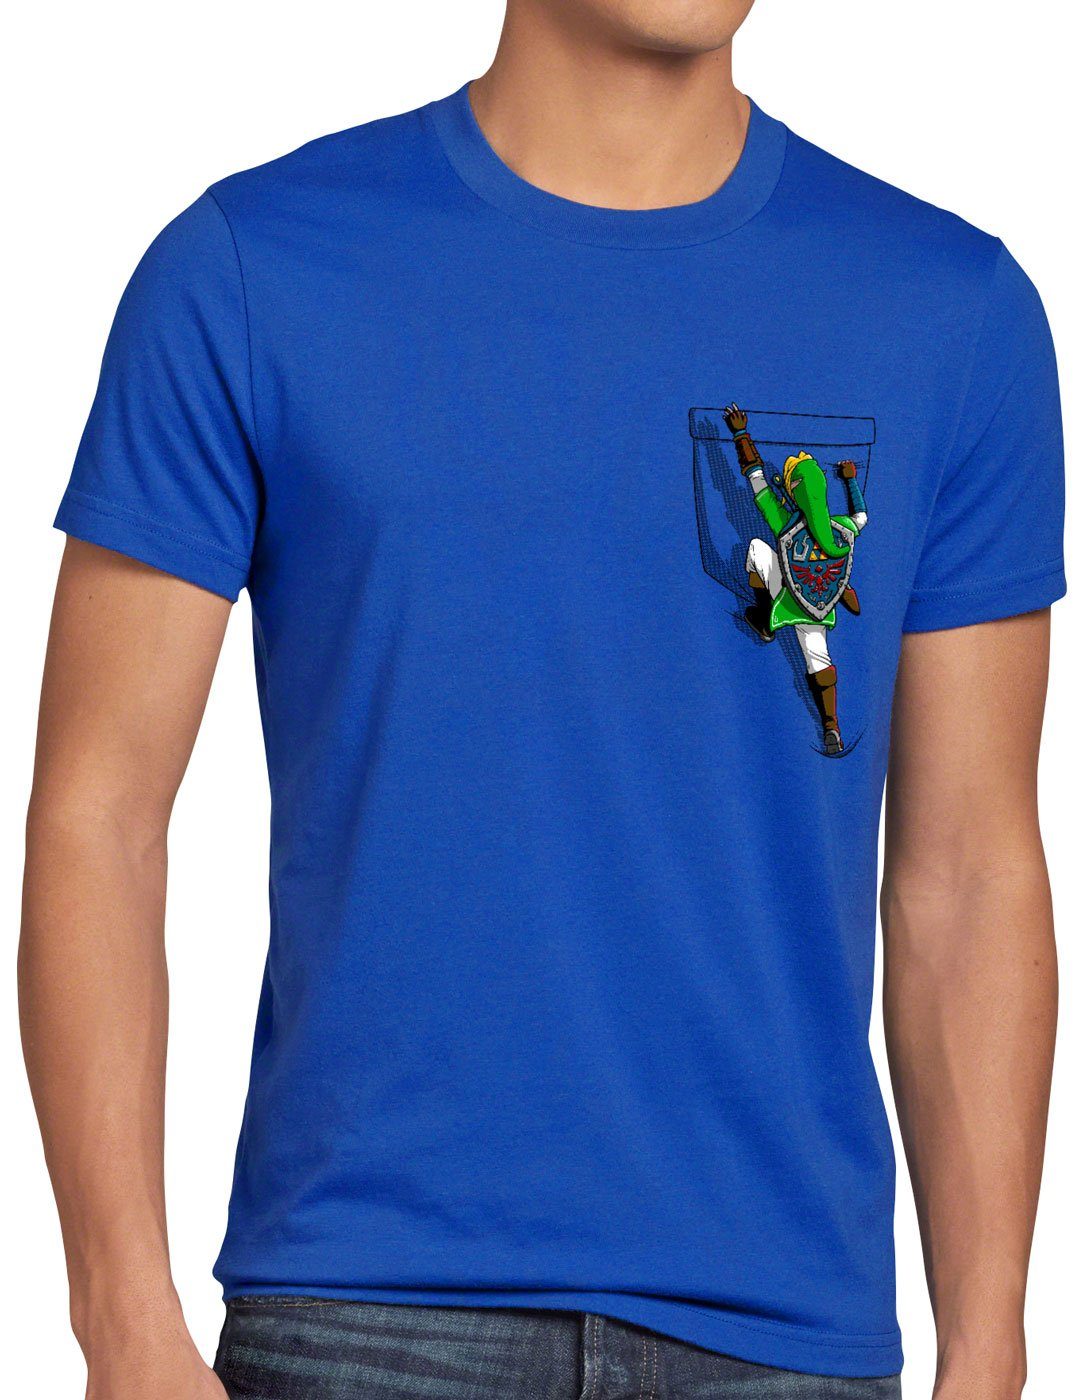 the Print-Shirt T-Shirt of Brusttasche ocarina breath Link style3 Herren snes switch blau wild